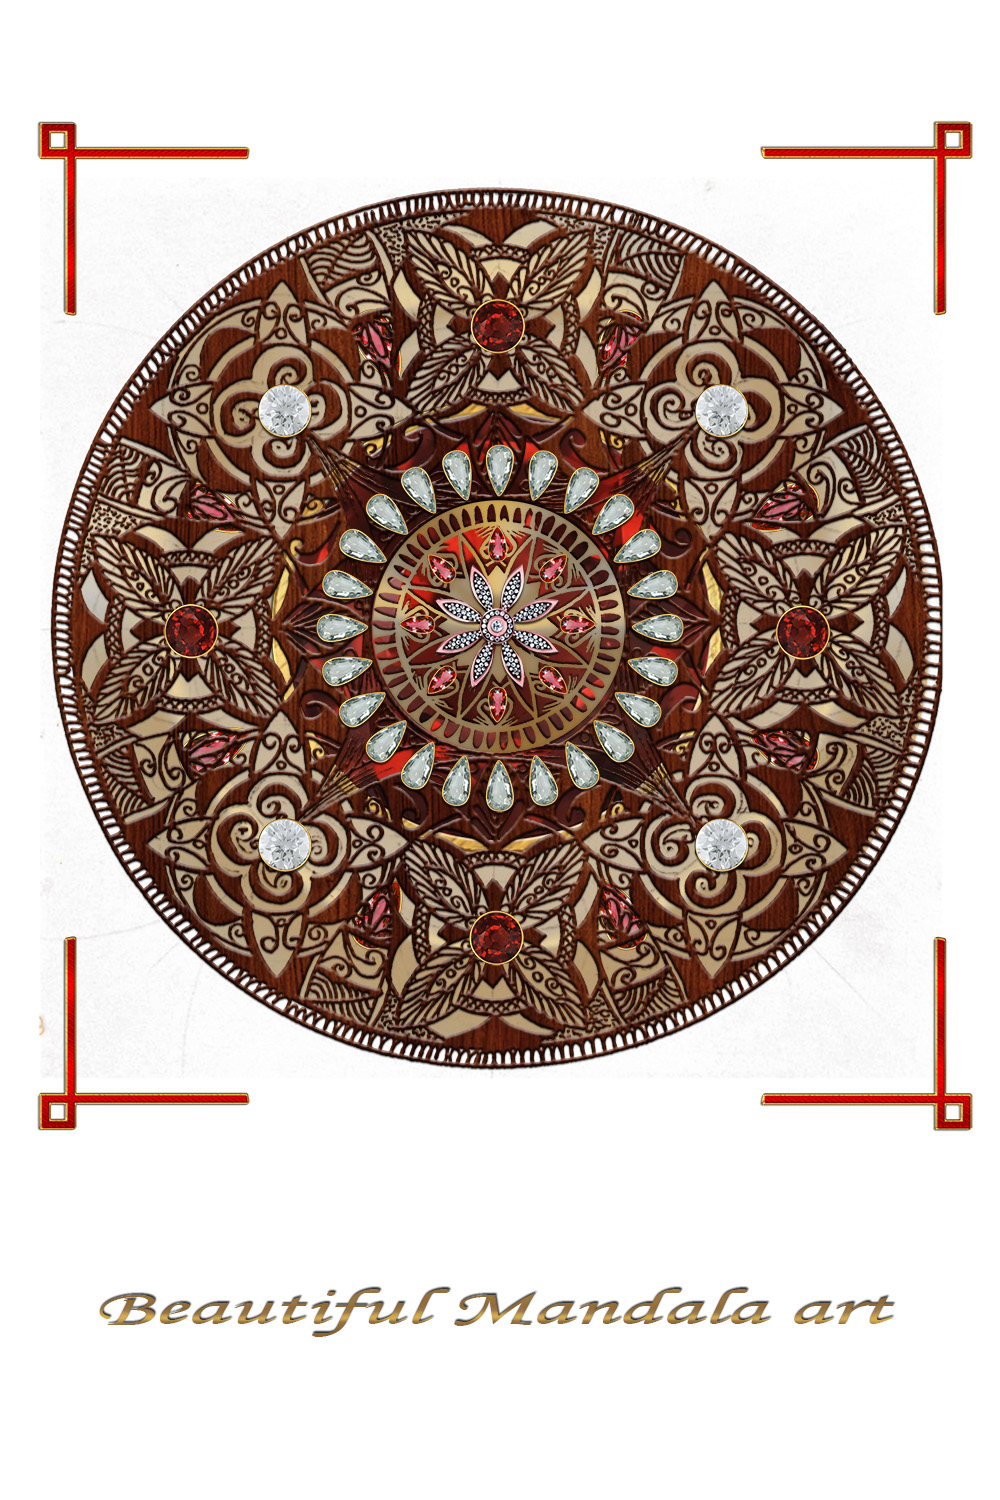 Beautiful Layered Mandala 100% Editable pinterest preview image.